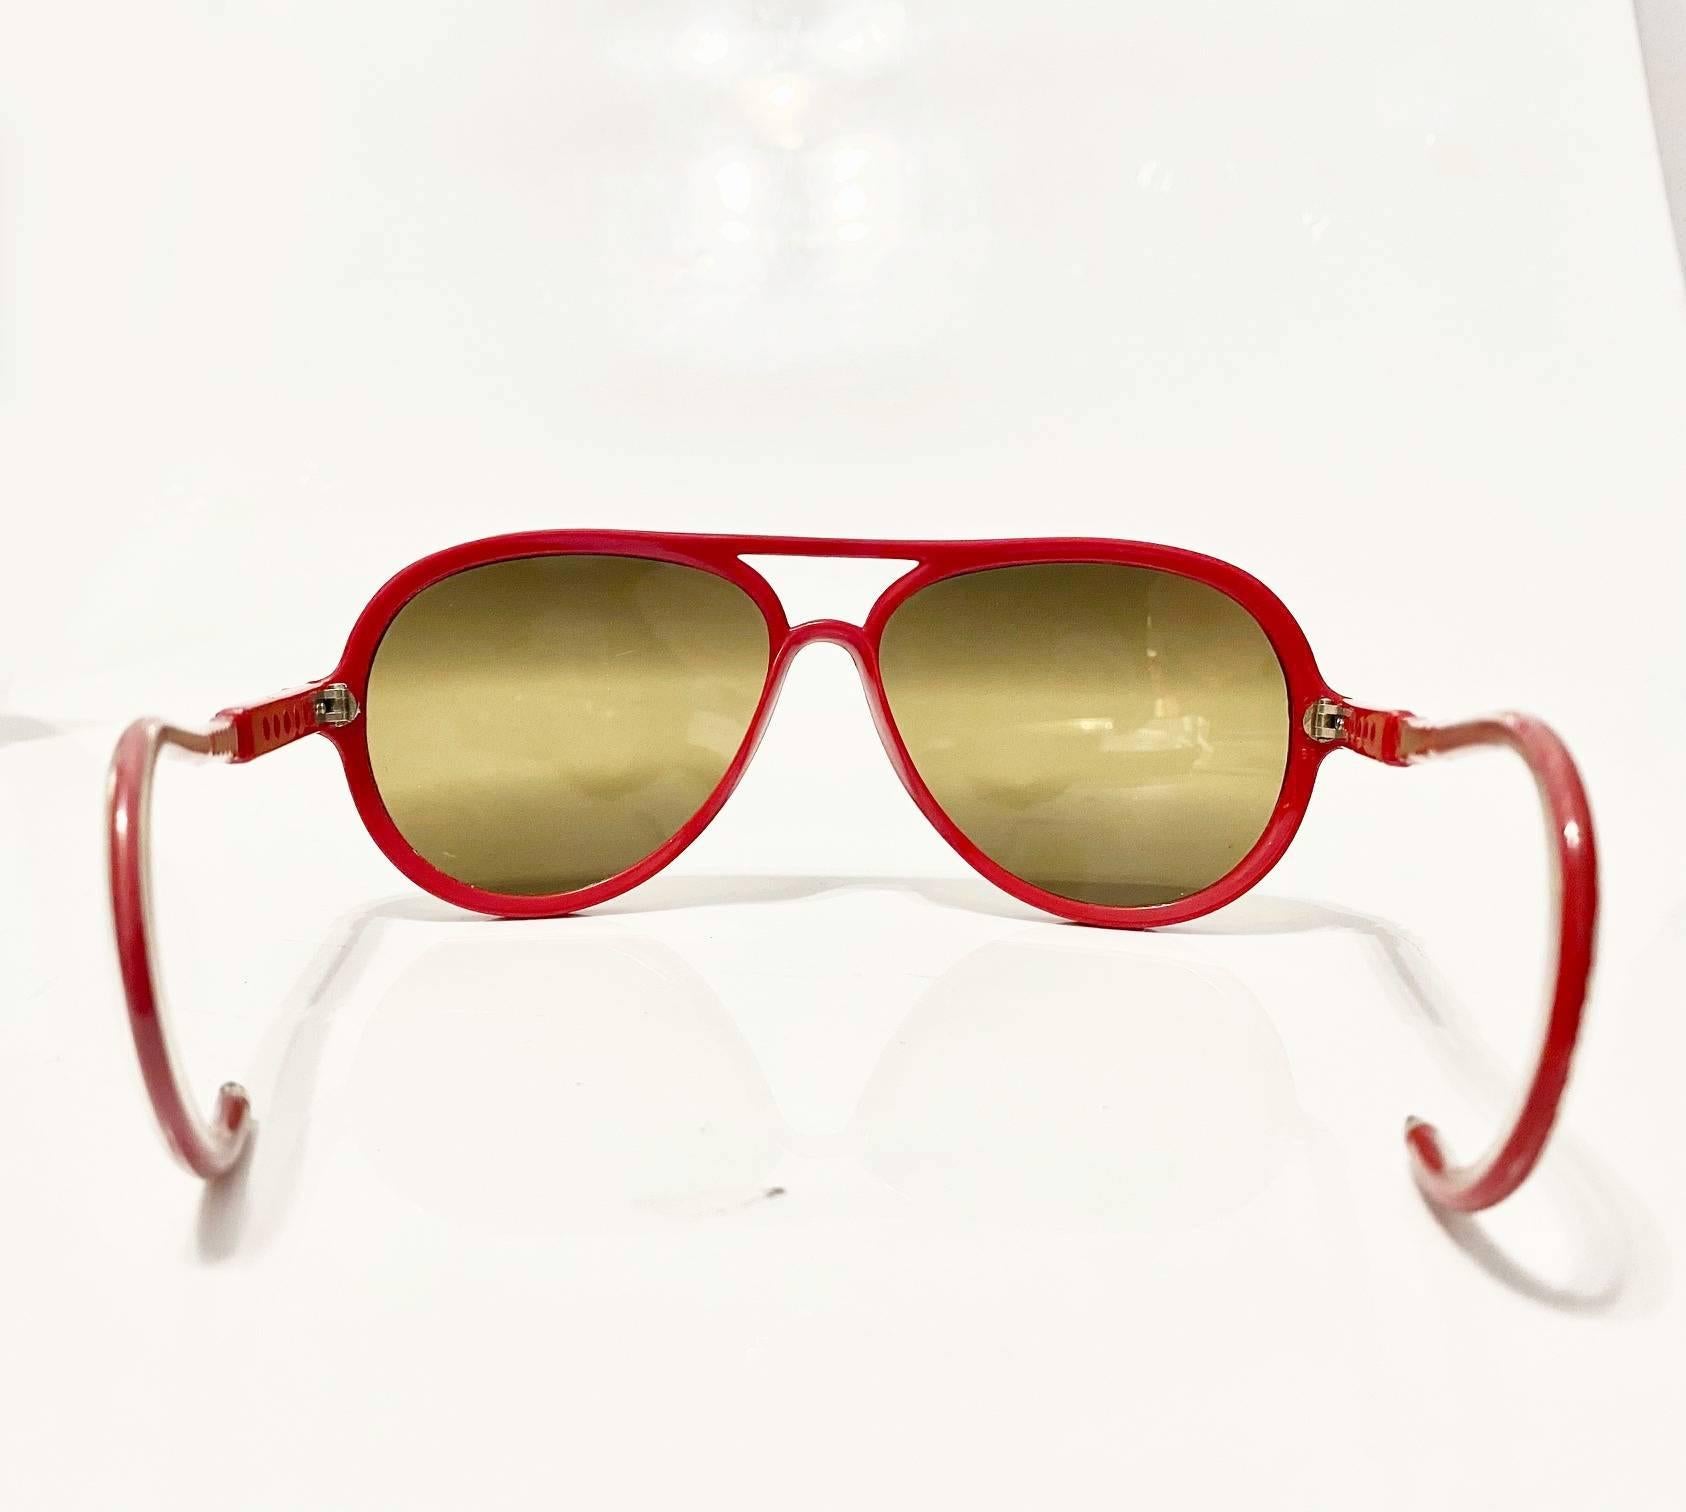  1980s Rossignol Mirrored Ski Red Adjustable Sunglasses 3